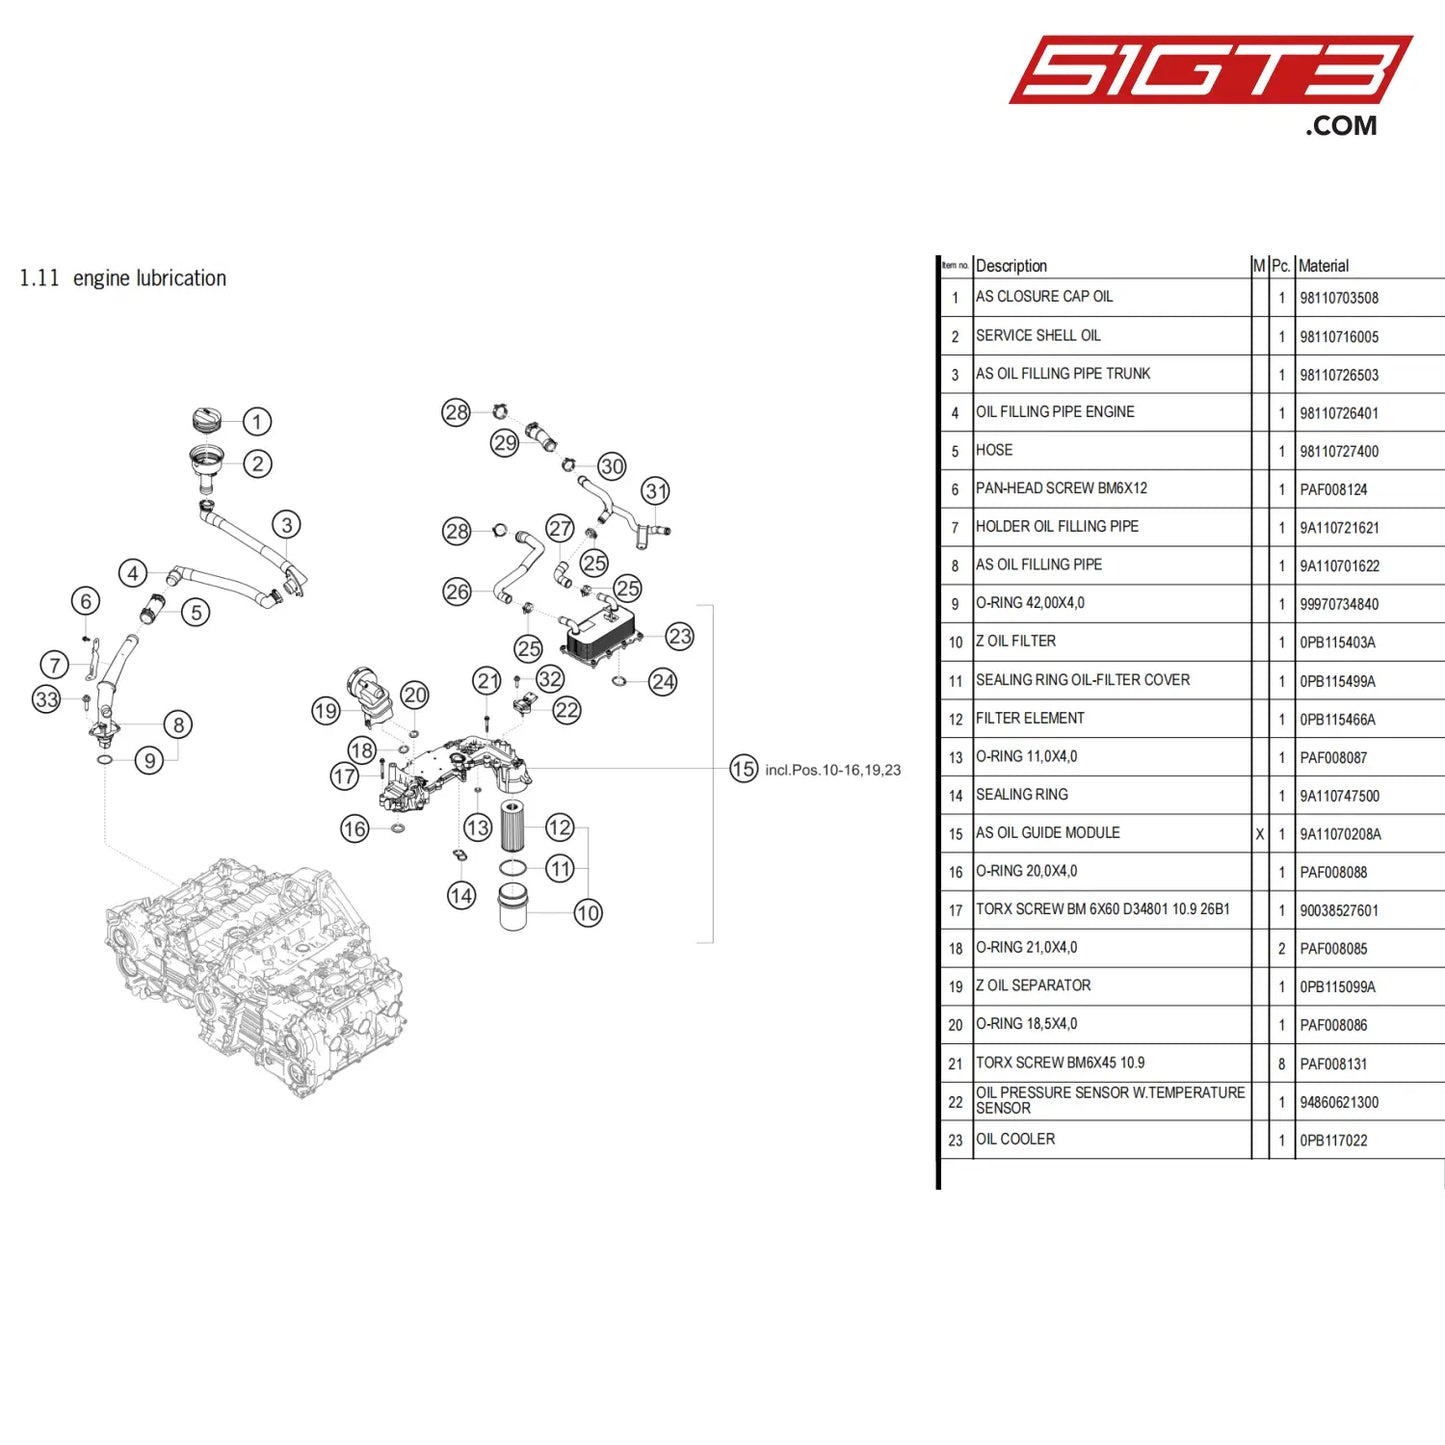 Return Line Collector - 9A110666500 [Porsche 718 Cayman Gt4 Clubsport] Engine Lubrication